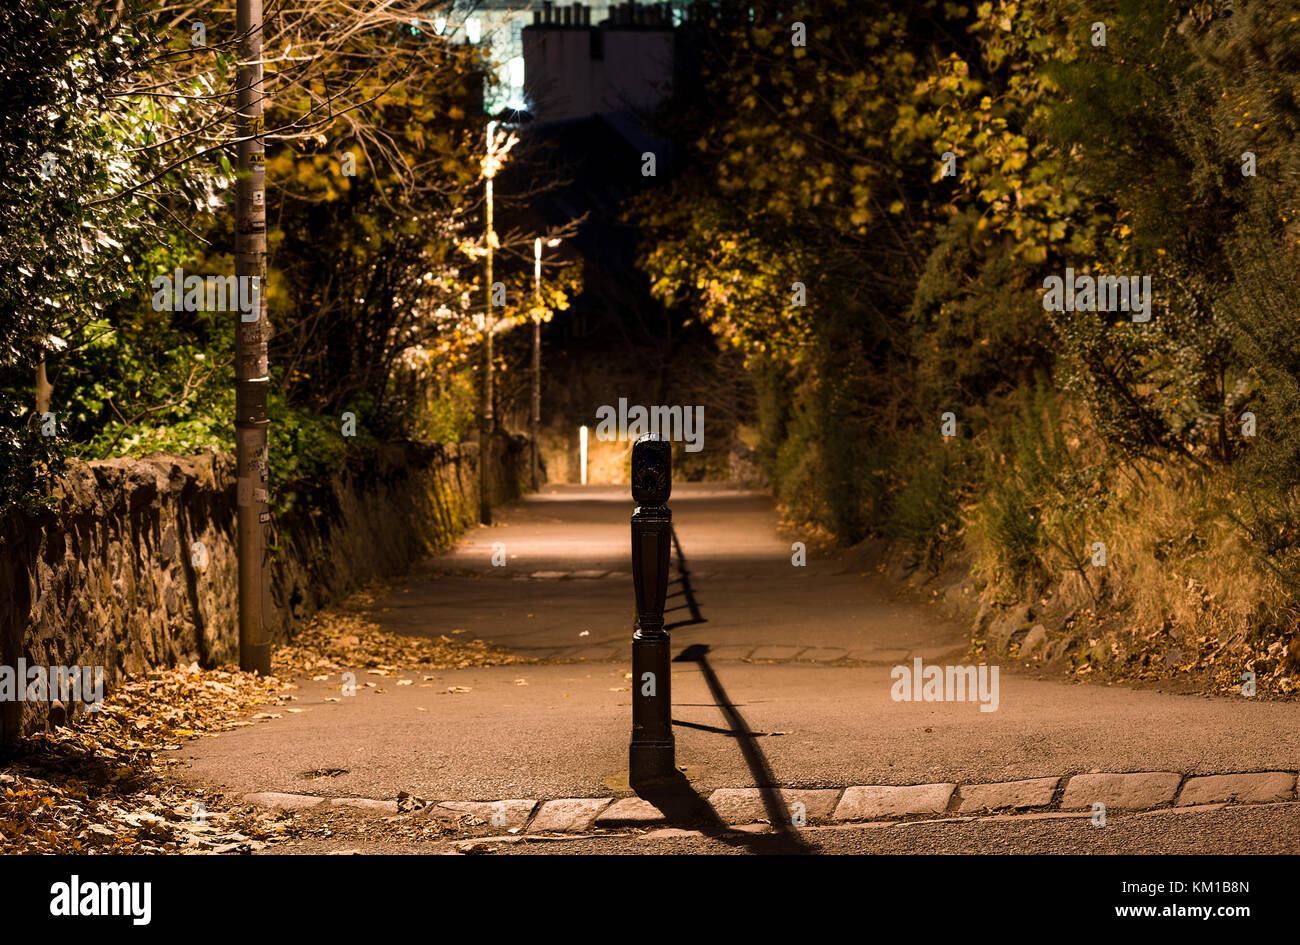 Street light illuminated path with hand rail down from Calton Hill, Edinburgh Stock Photo